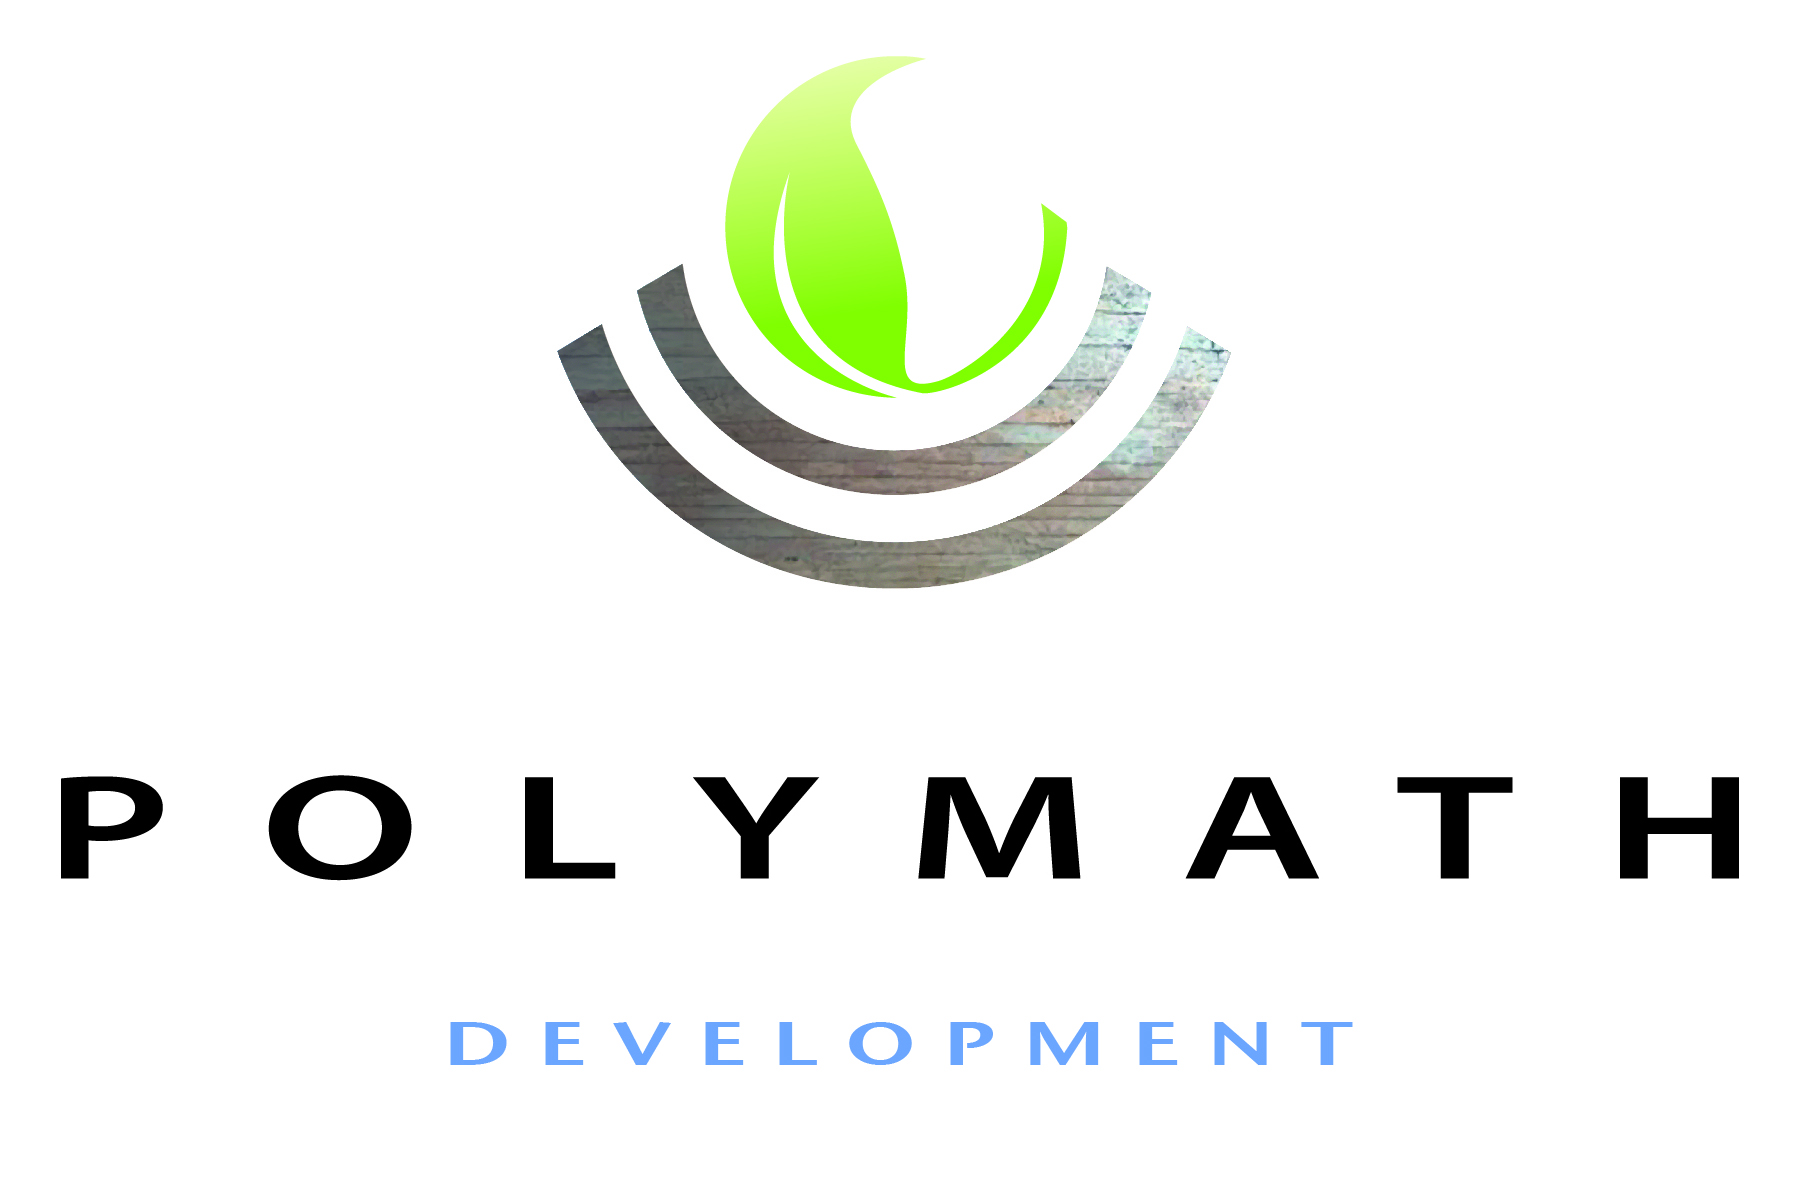 Polymath Development logo.jpg